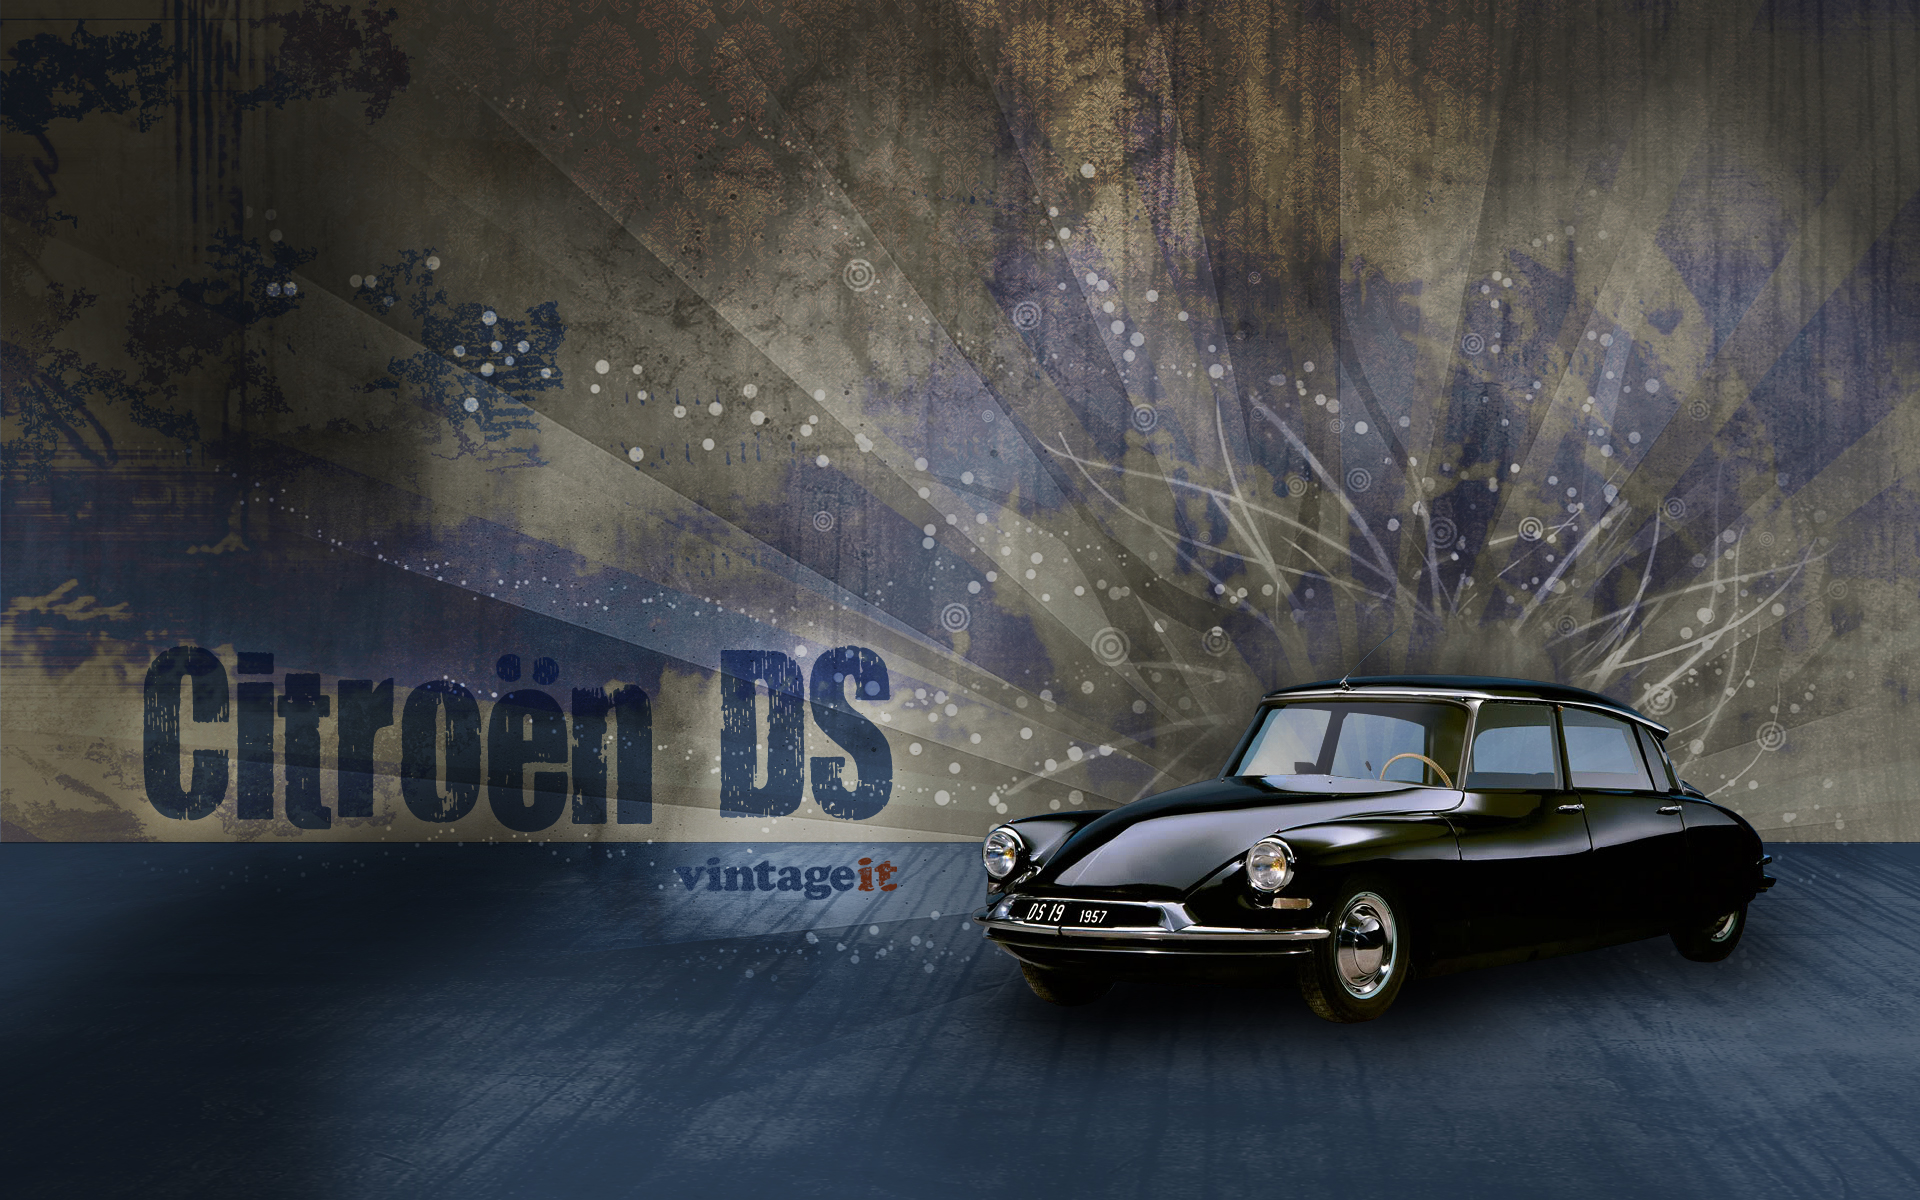 Citroën DS vintage wallpaper Desktop HD iPad iPhone